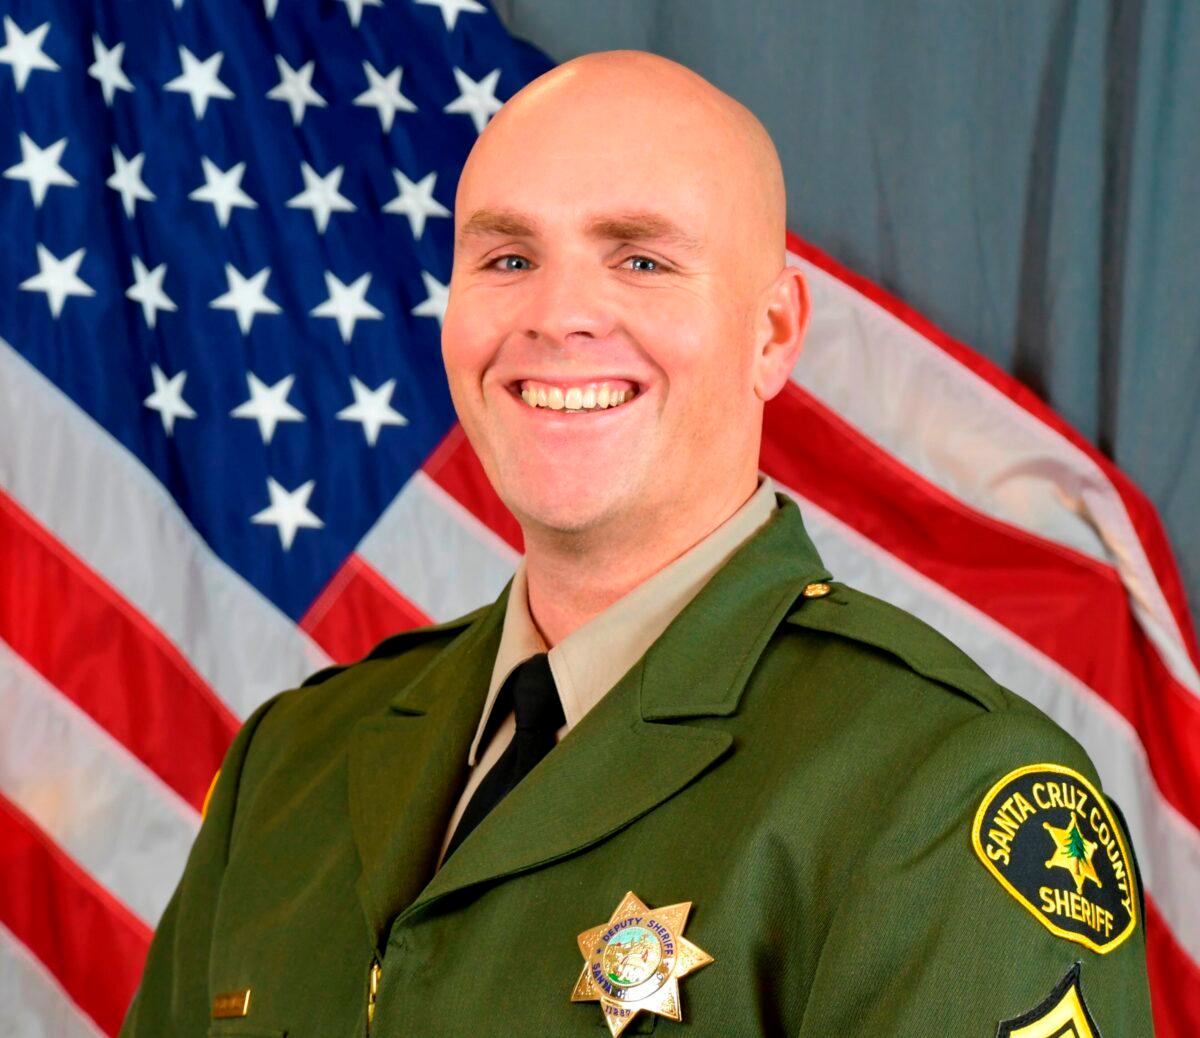 File photo of Sgt. Damon Gutzwiller who was shot and killed in Ben Lomond, an unincorporated area near Santa Cruz, Calif., on June 6, 2020. (Santa Cruz County Sheriff’s Office via AP)